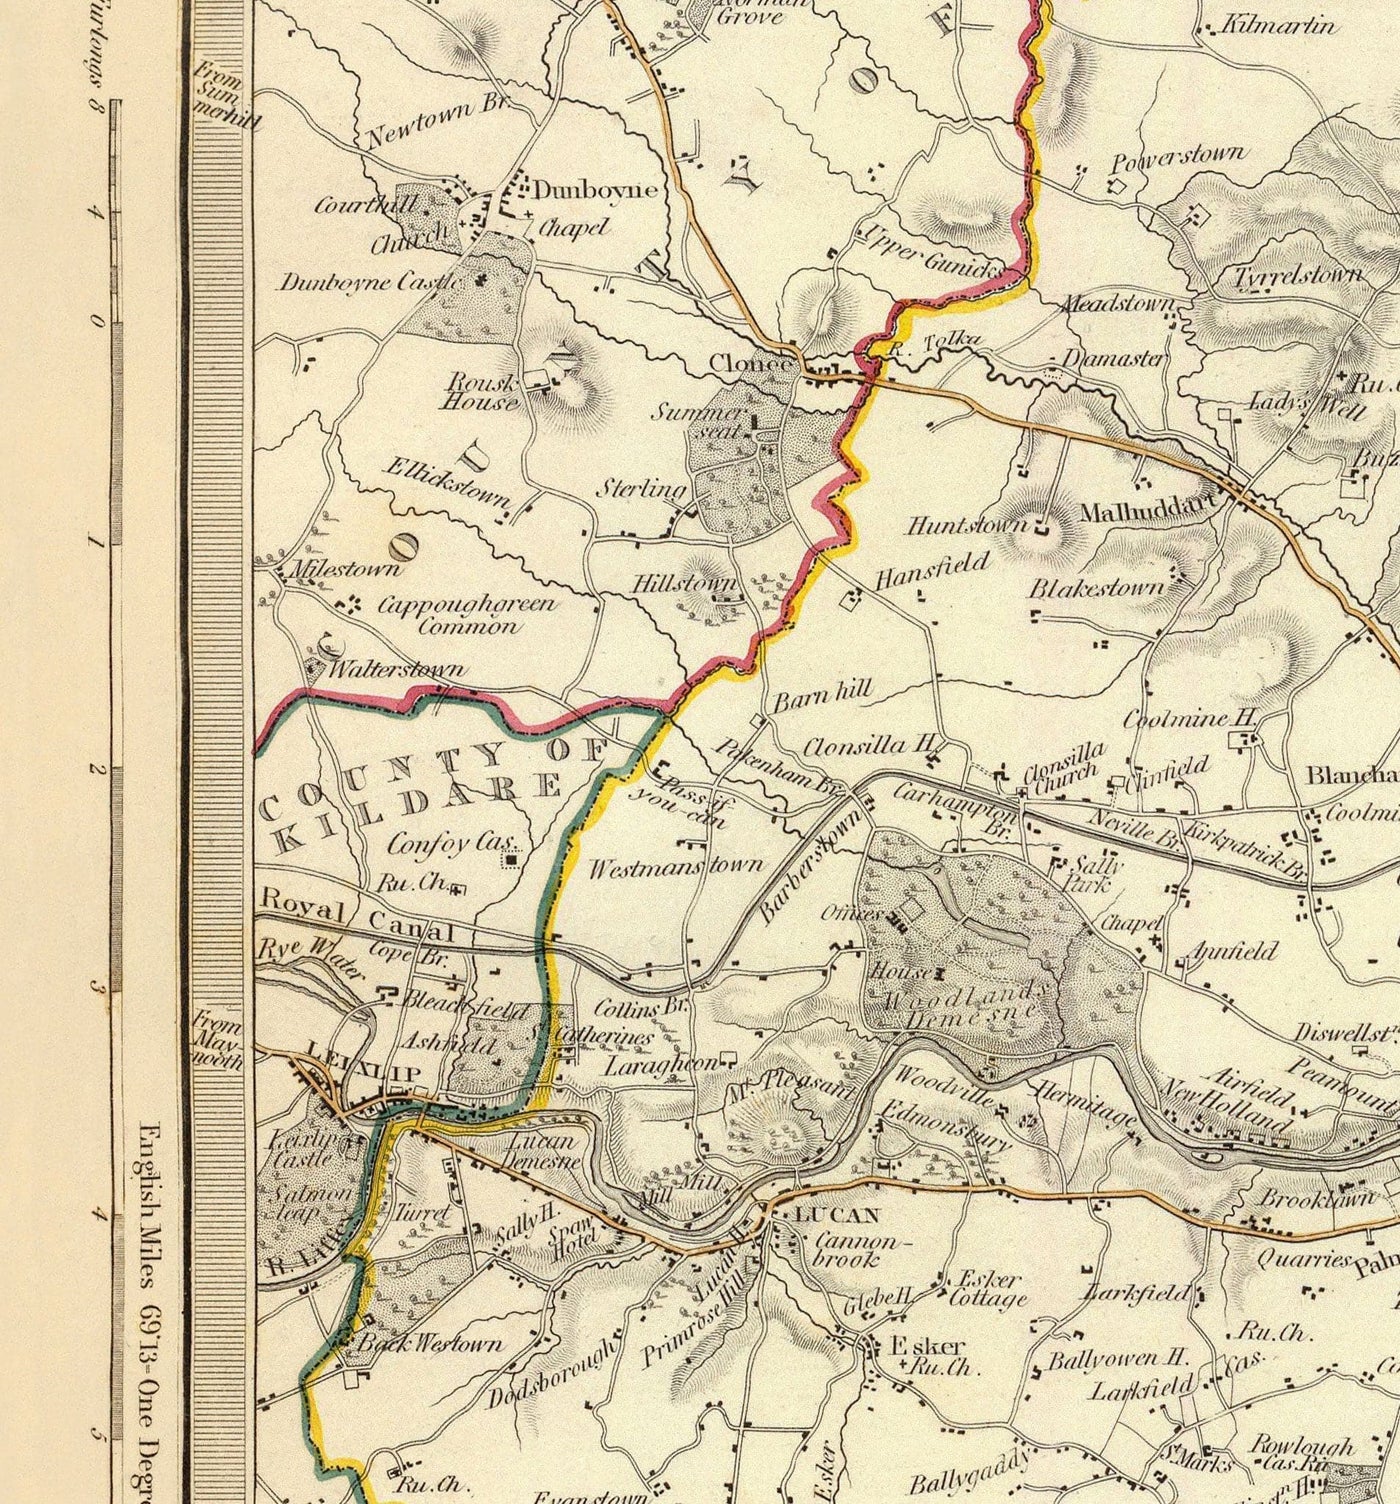 Ancienne carte de Dublin et de banlieue, Irlande, 1837 de Sduk - Leinster, Baie de Dublin, Grand Dublin